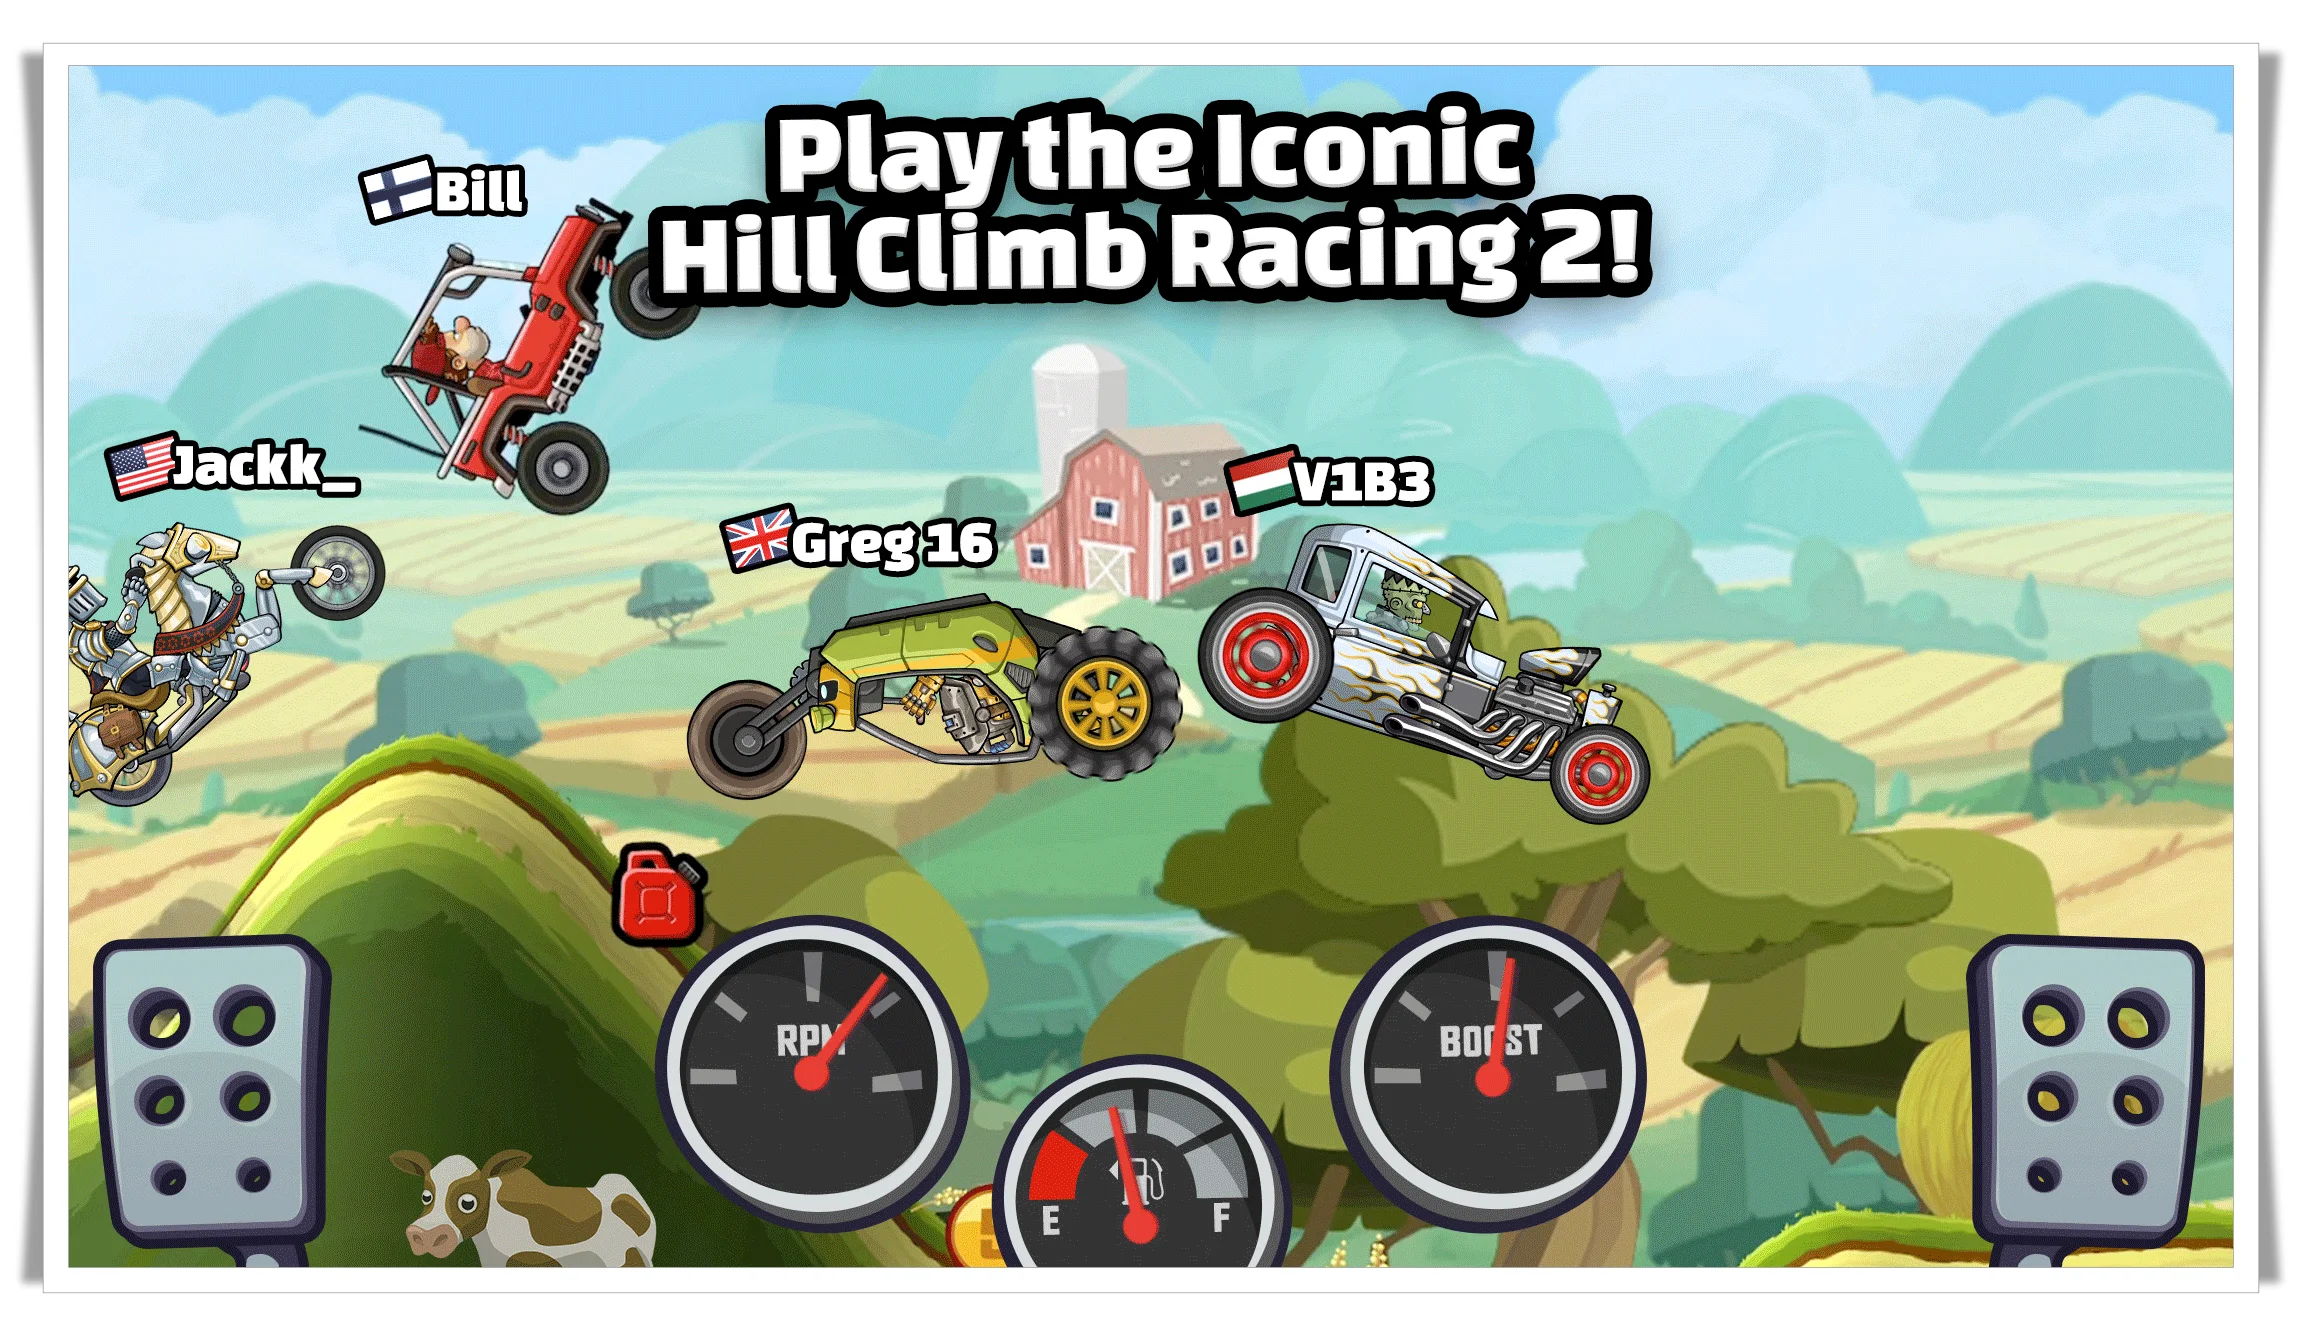 Hill Climb Racing 1.60.1 Free Download